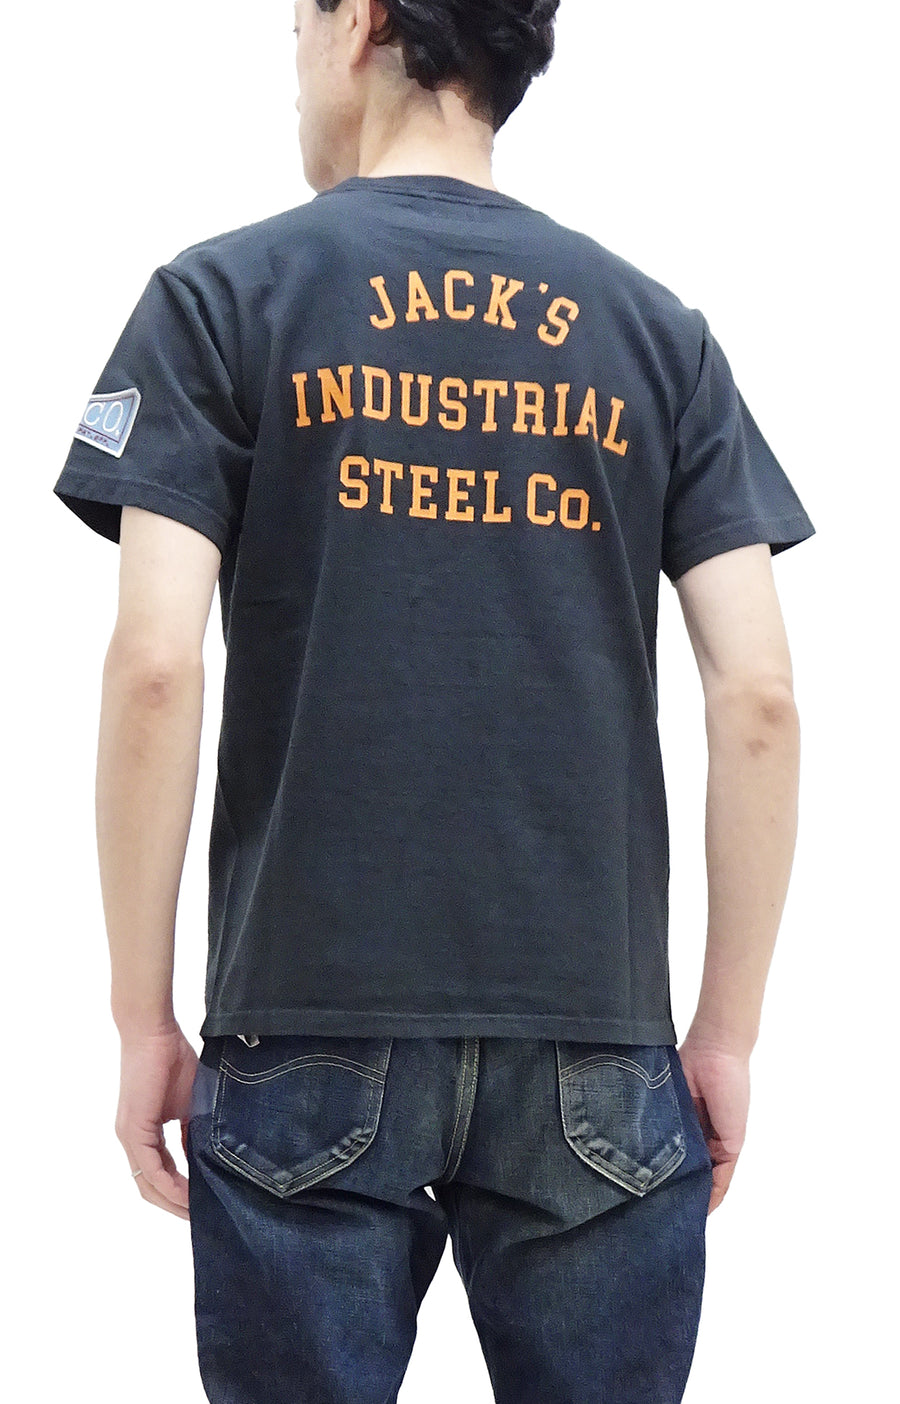 Pherrows T-Shirt Men's Short Sleeve Patched and Printed Tee Pherrow's 24S-PT3 Slate-Black (a slightly bluish black)